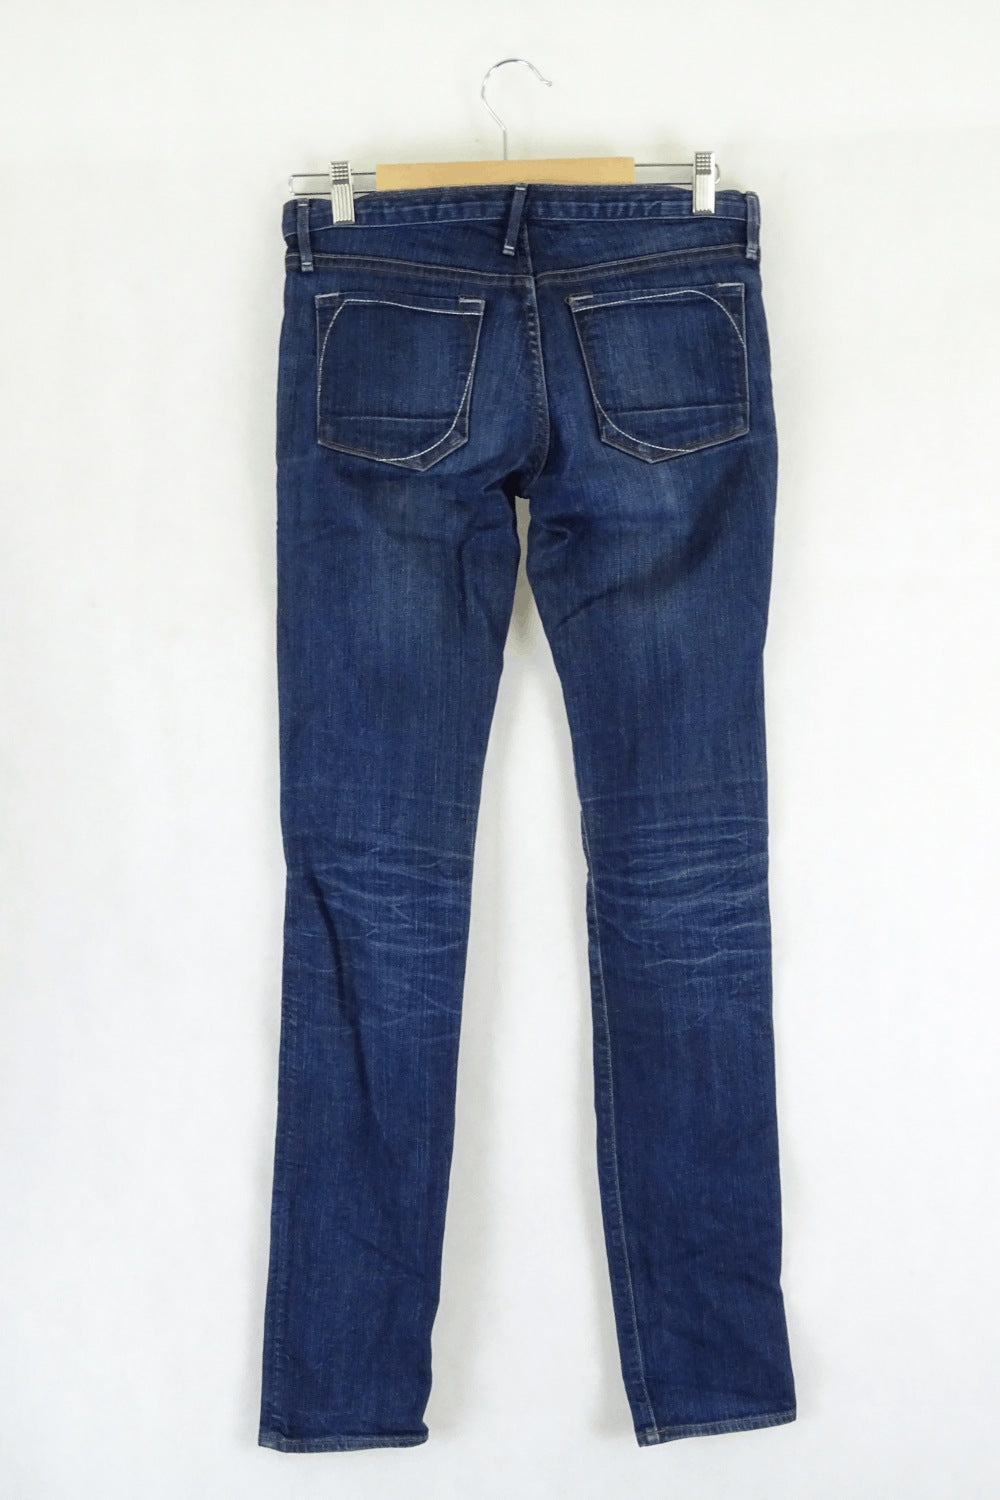 Earnest Sewn Jeans 27 (9AU)